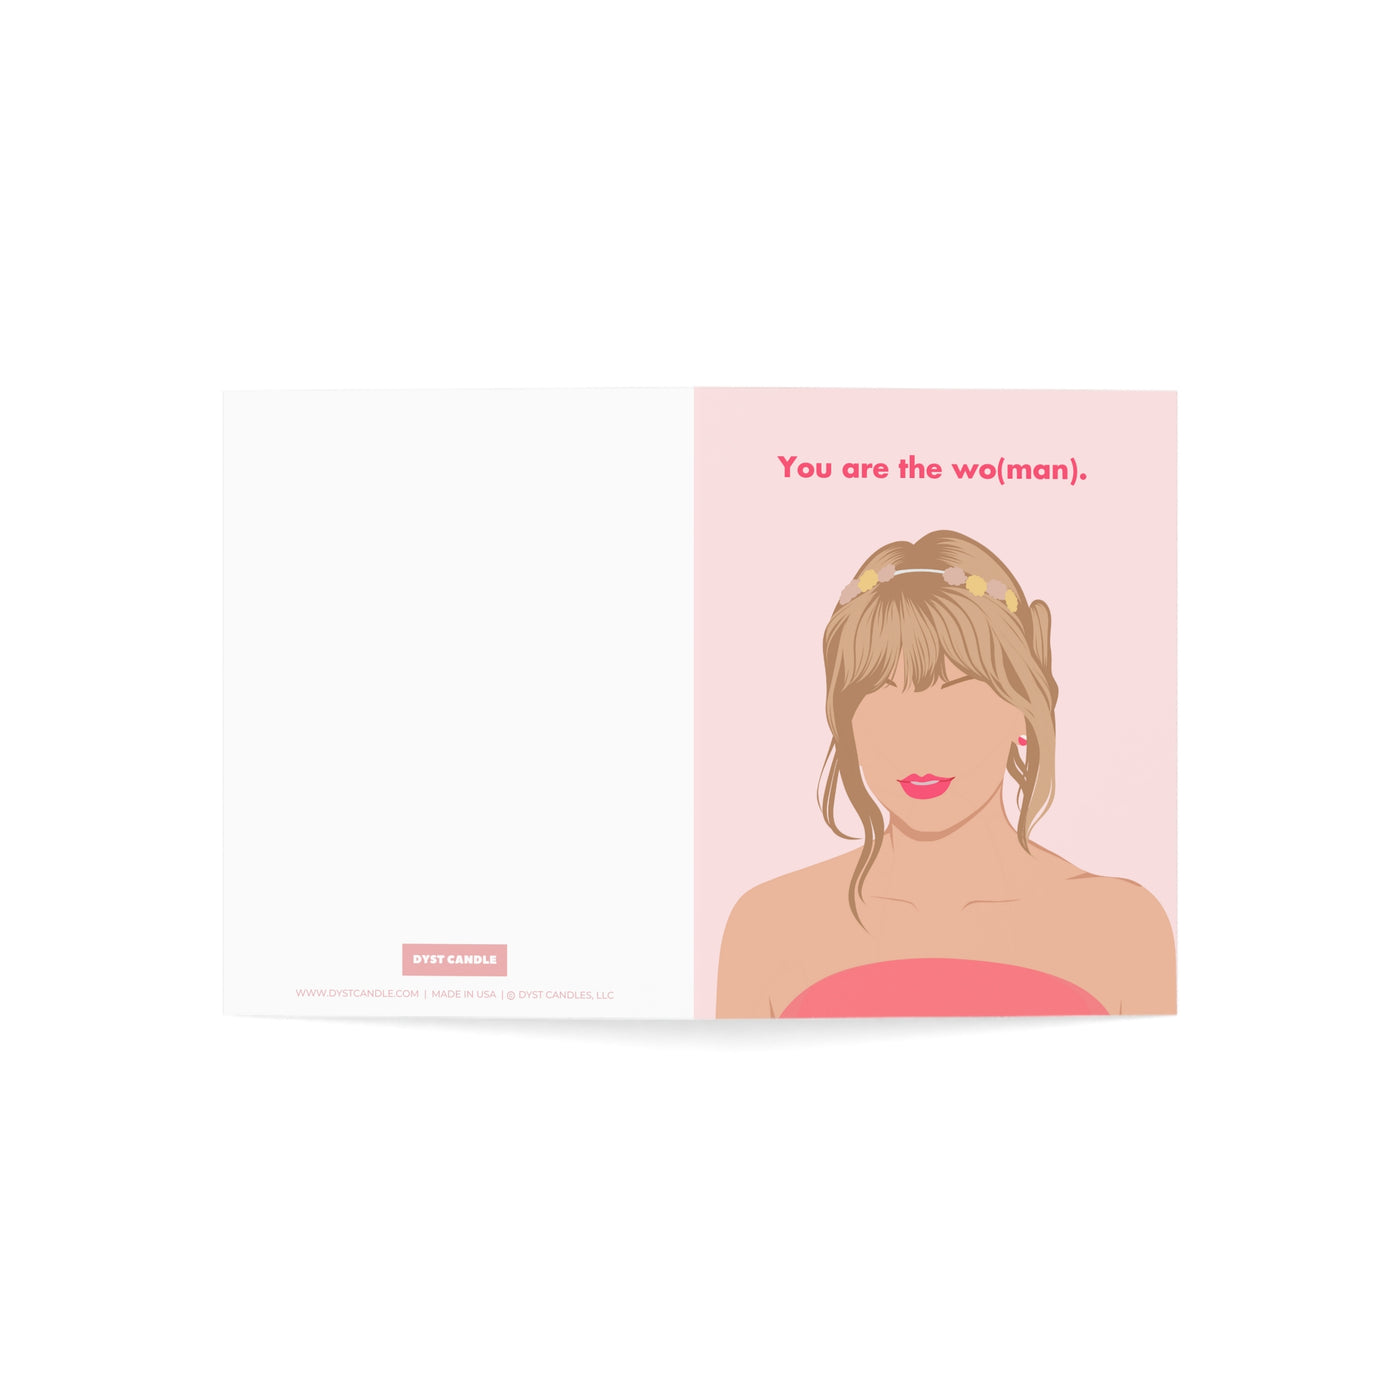 The Taylor - Congrats Greeting Card